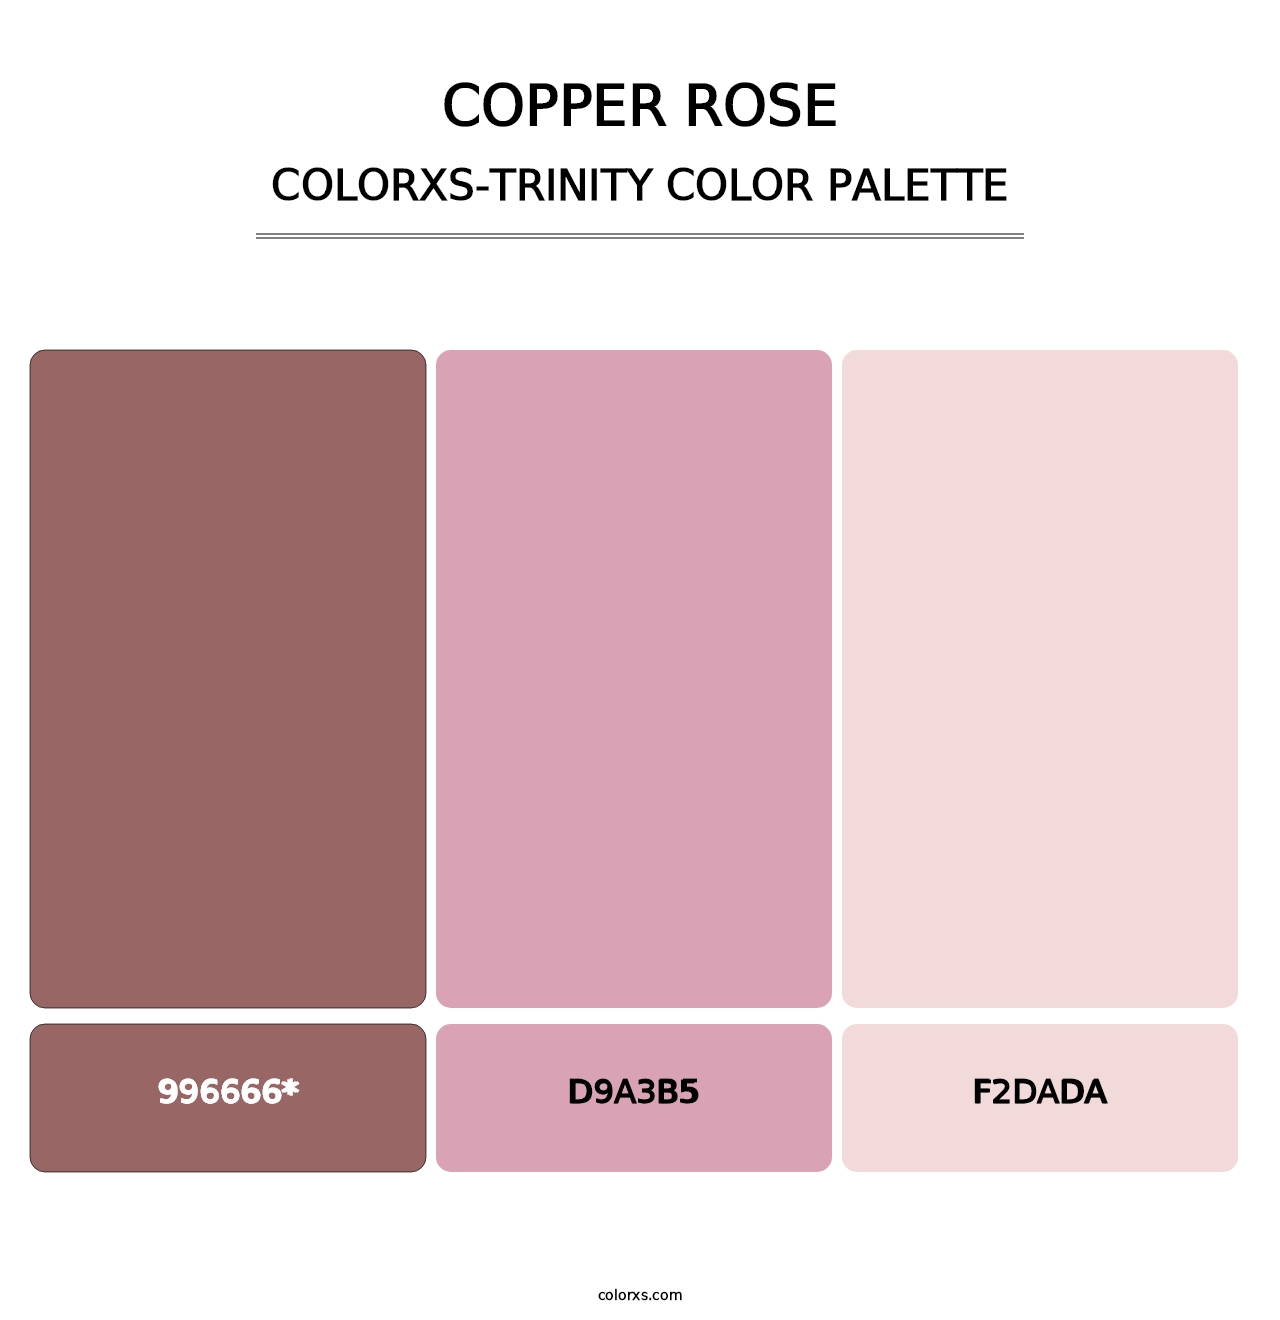 Copper rose - Colorxs Trinity Palette